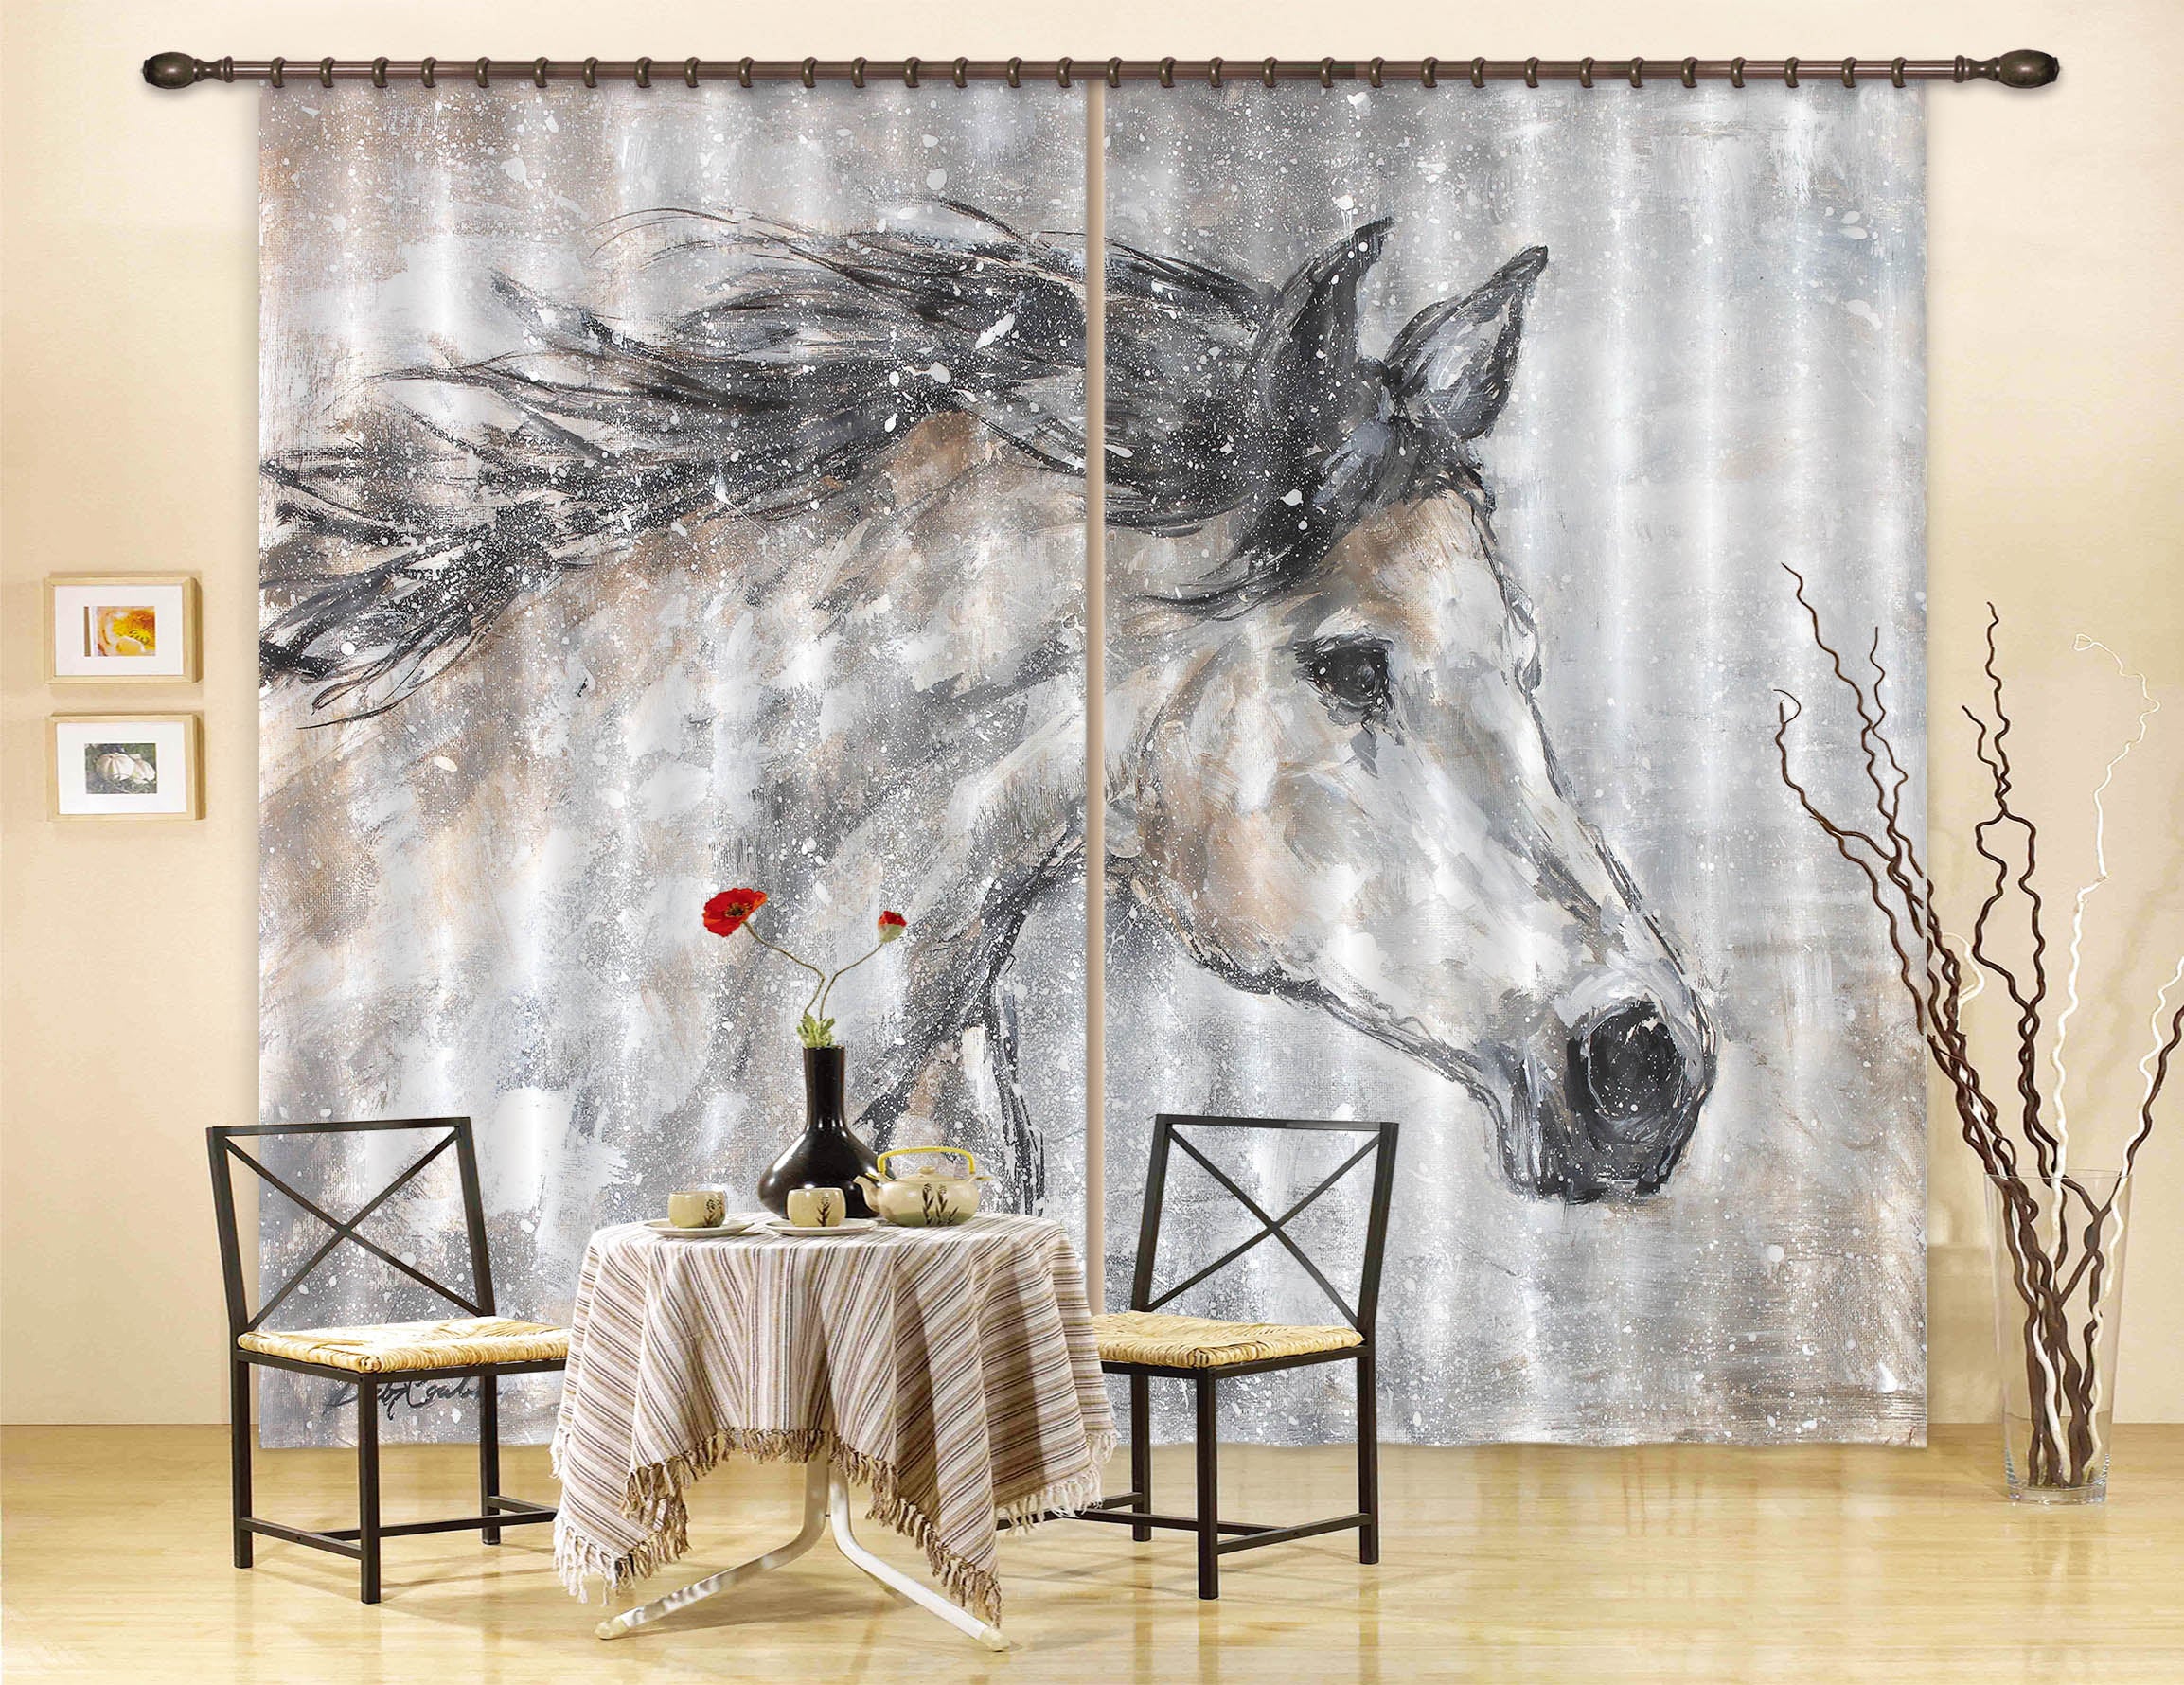 3D Horse 2208 Debi Coules Curtain Curtains Drapes